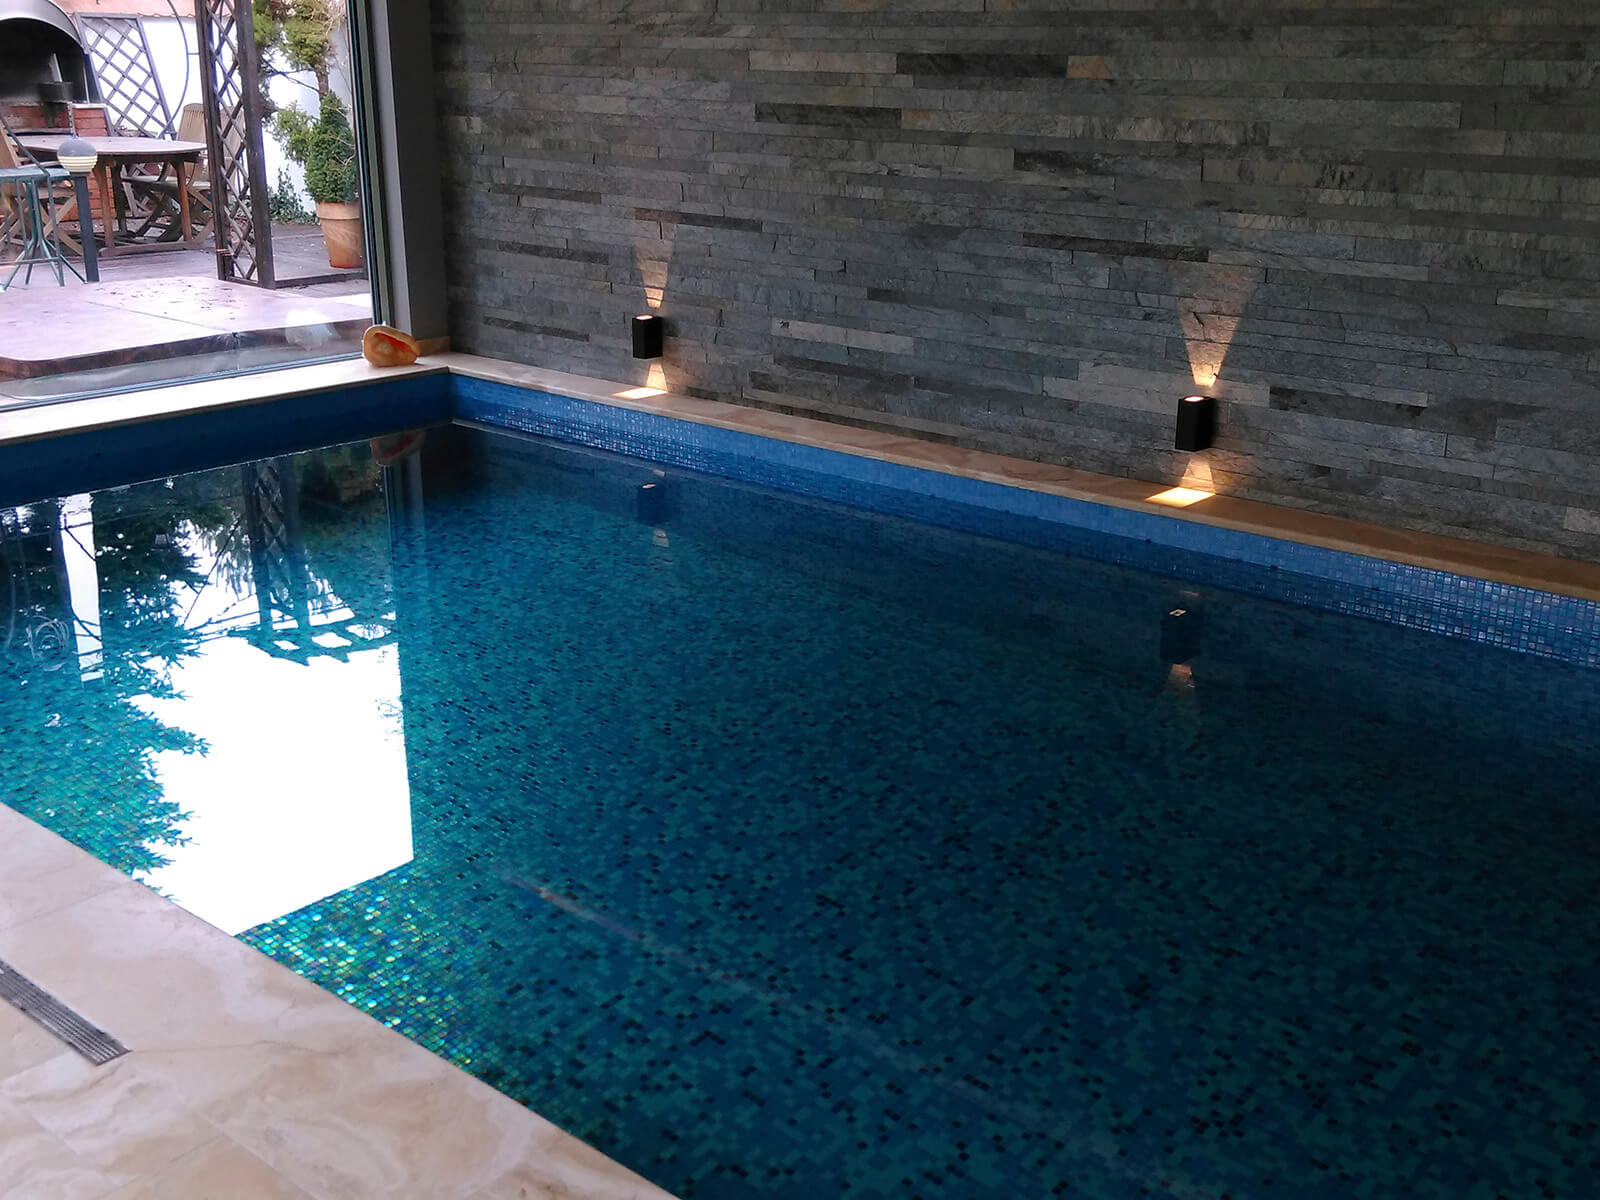 Prachtig verlicht binnenzwembad in koude blauwtinten mix glasmozaïek zwembad tegels